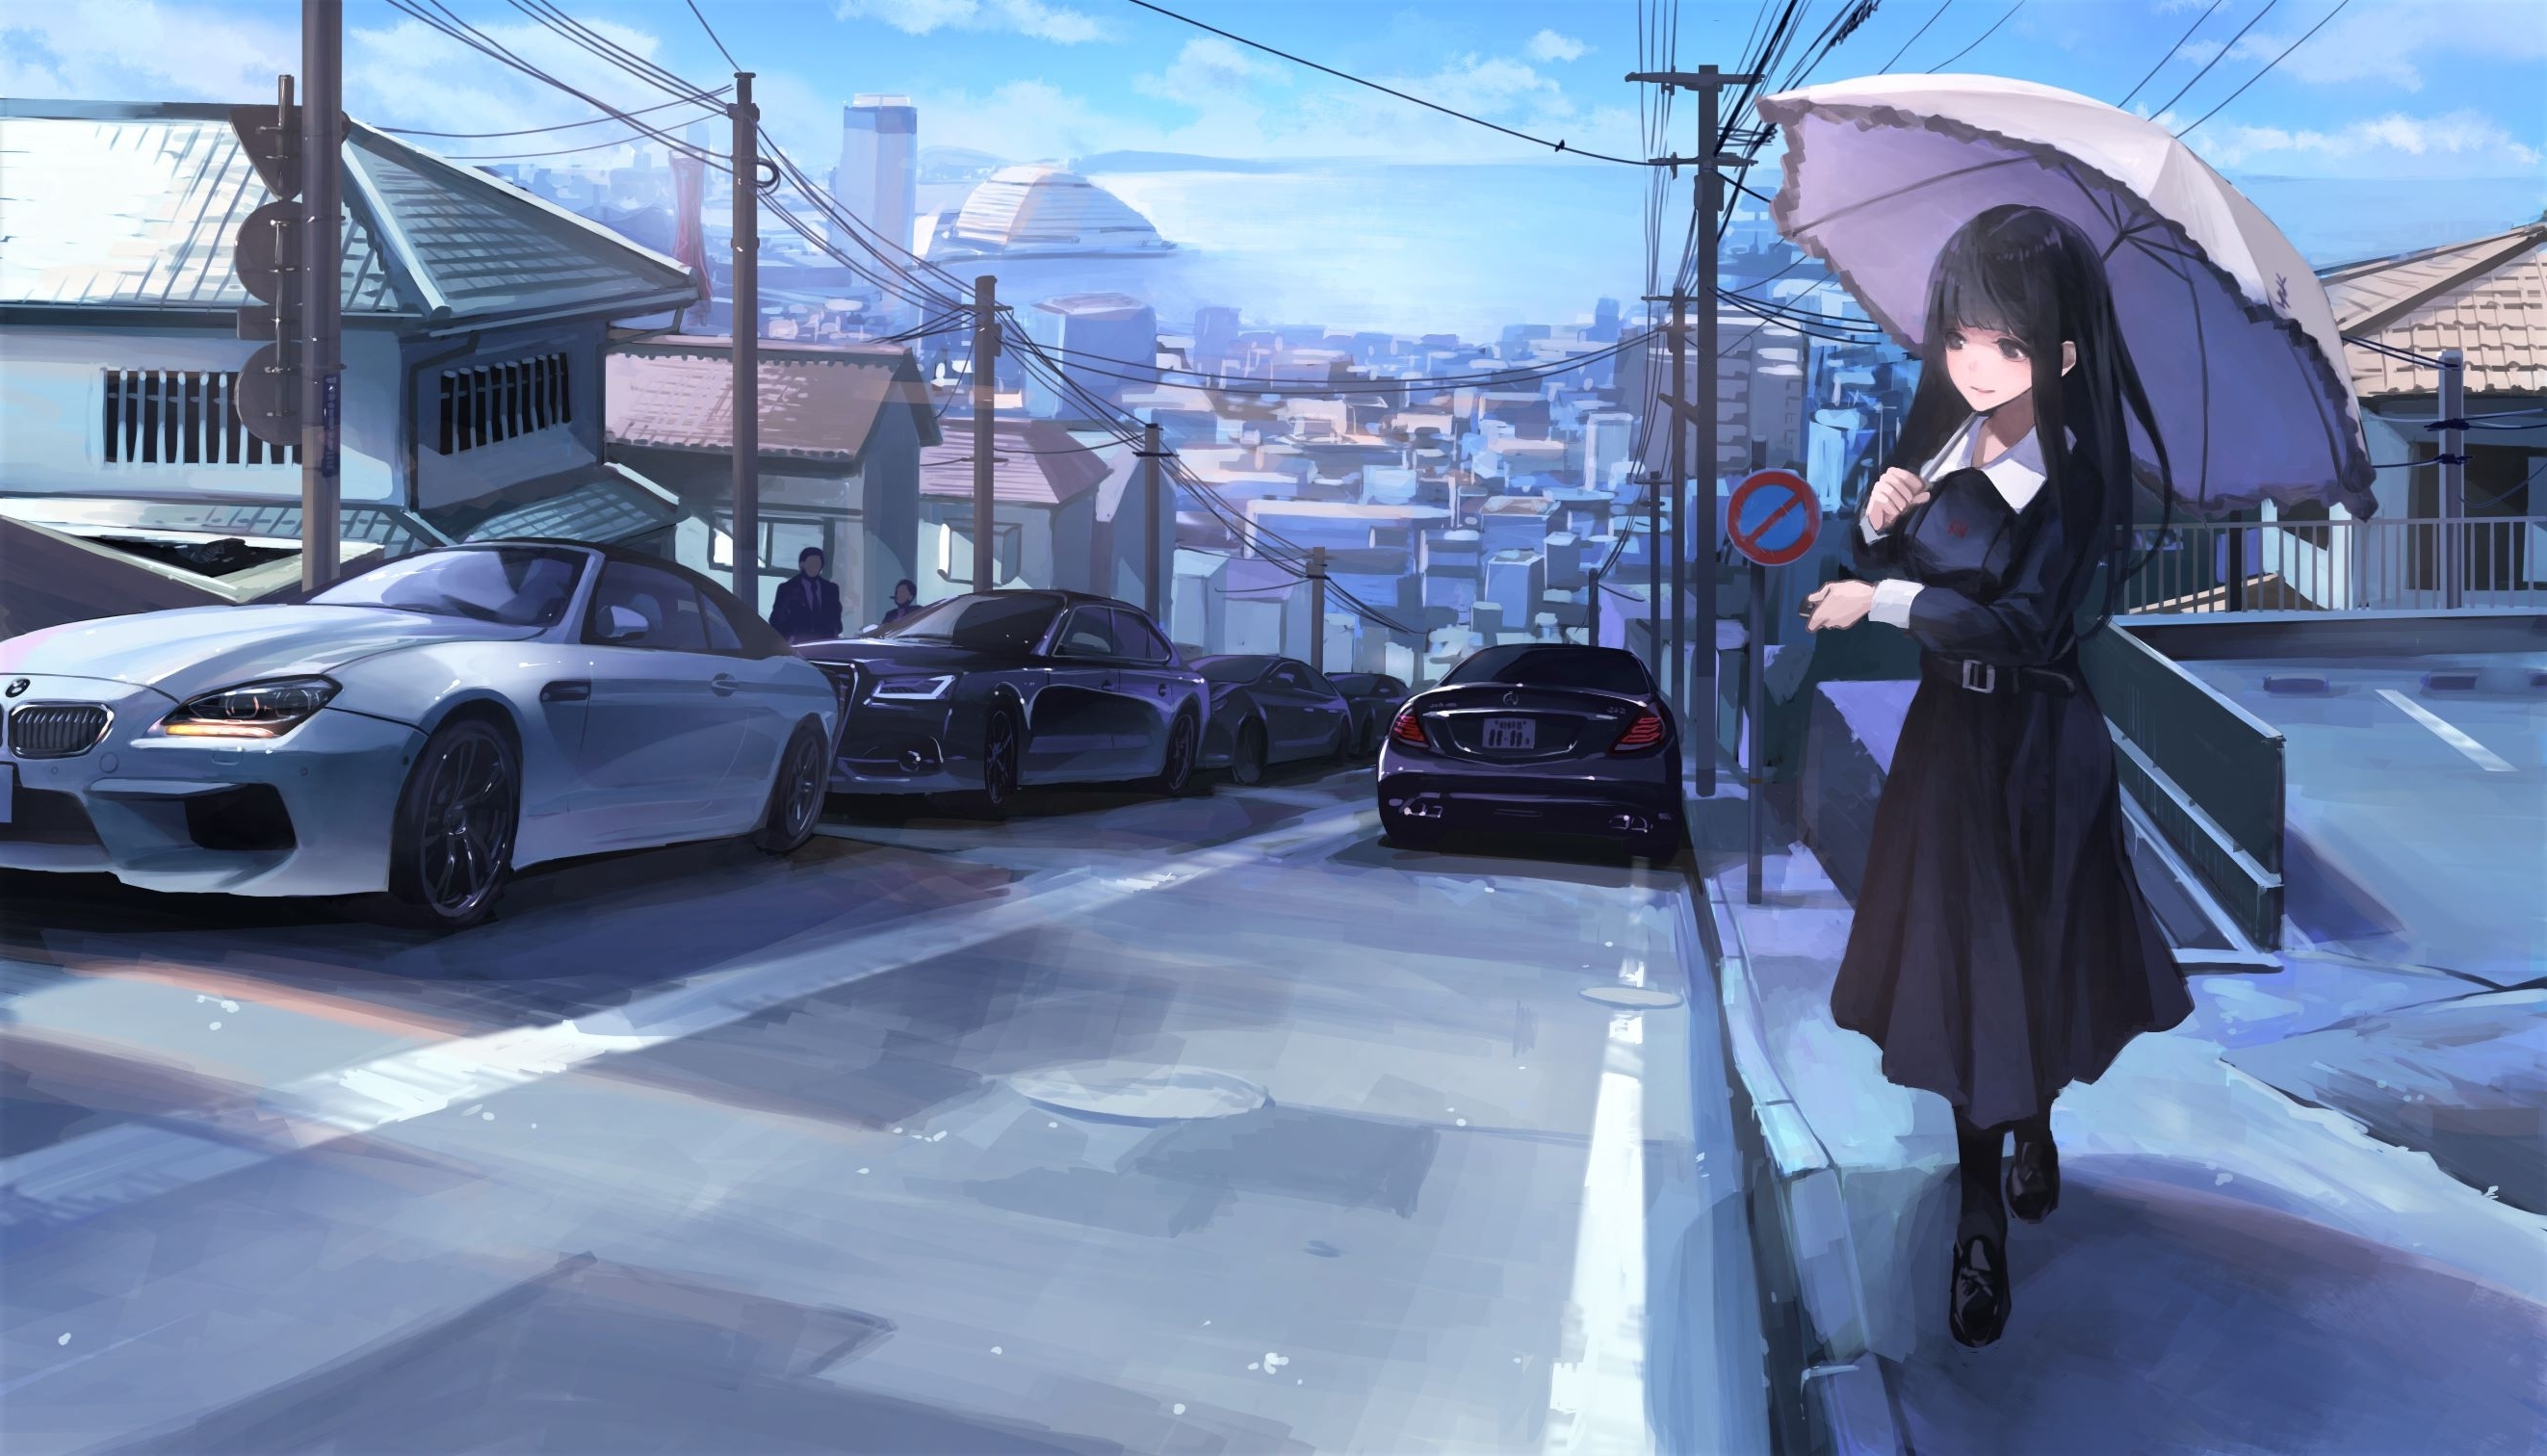 Wallpaper Scenic, Umbrella, Anime Girl, Urban, Buildings, Street, People, Luxury Cars:2645x1512